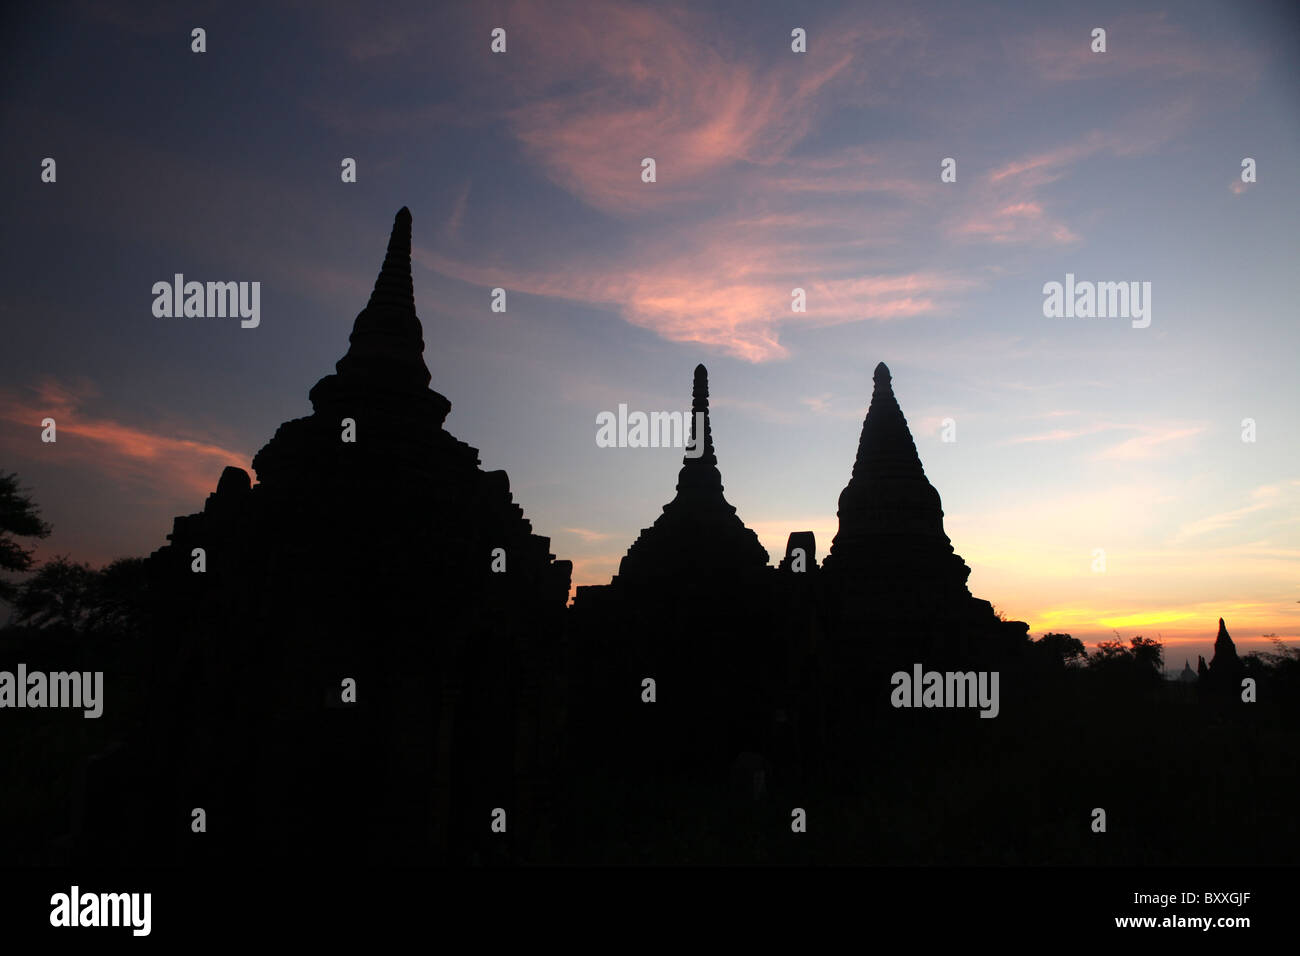 Siluetas de templos budistas o pagodas al atardecer en Bagan, Myanmar o Birmania. Foto de stock